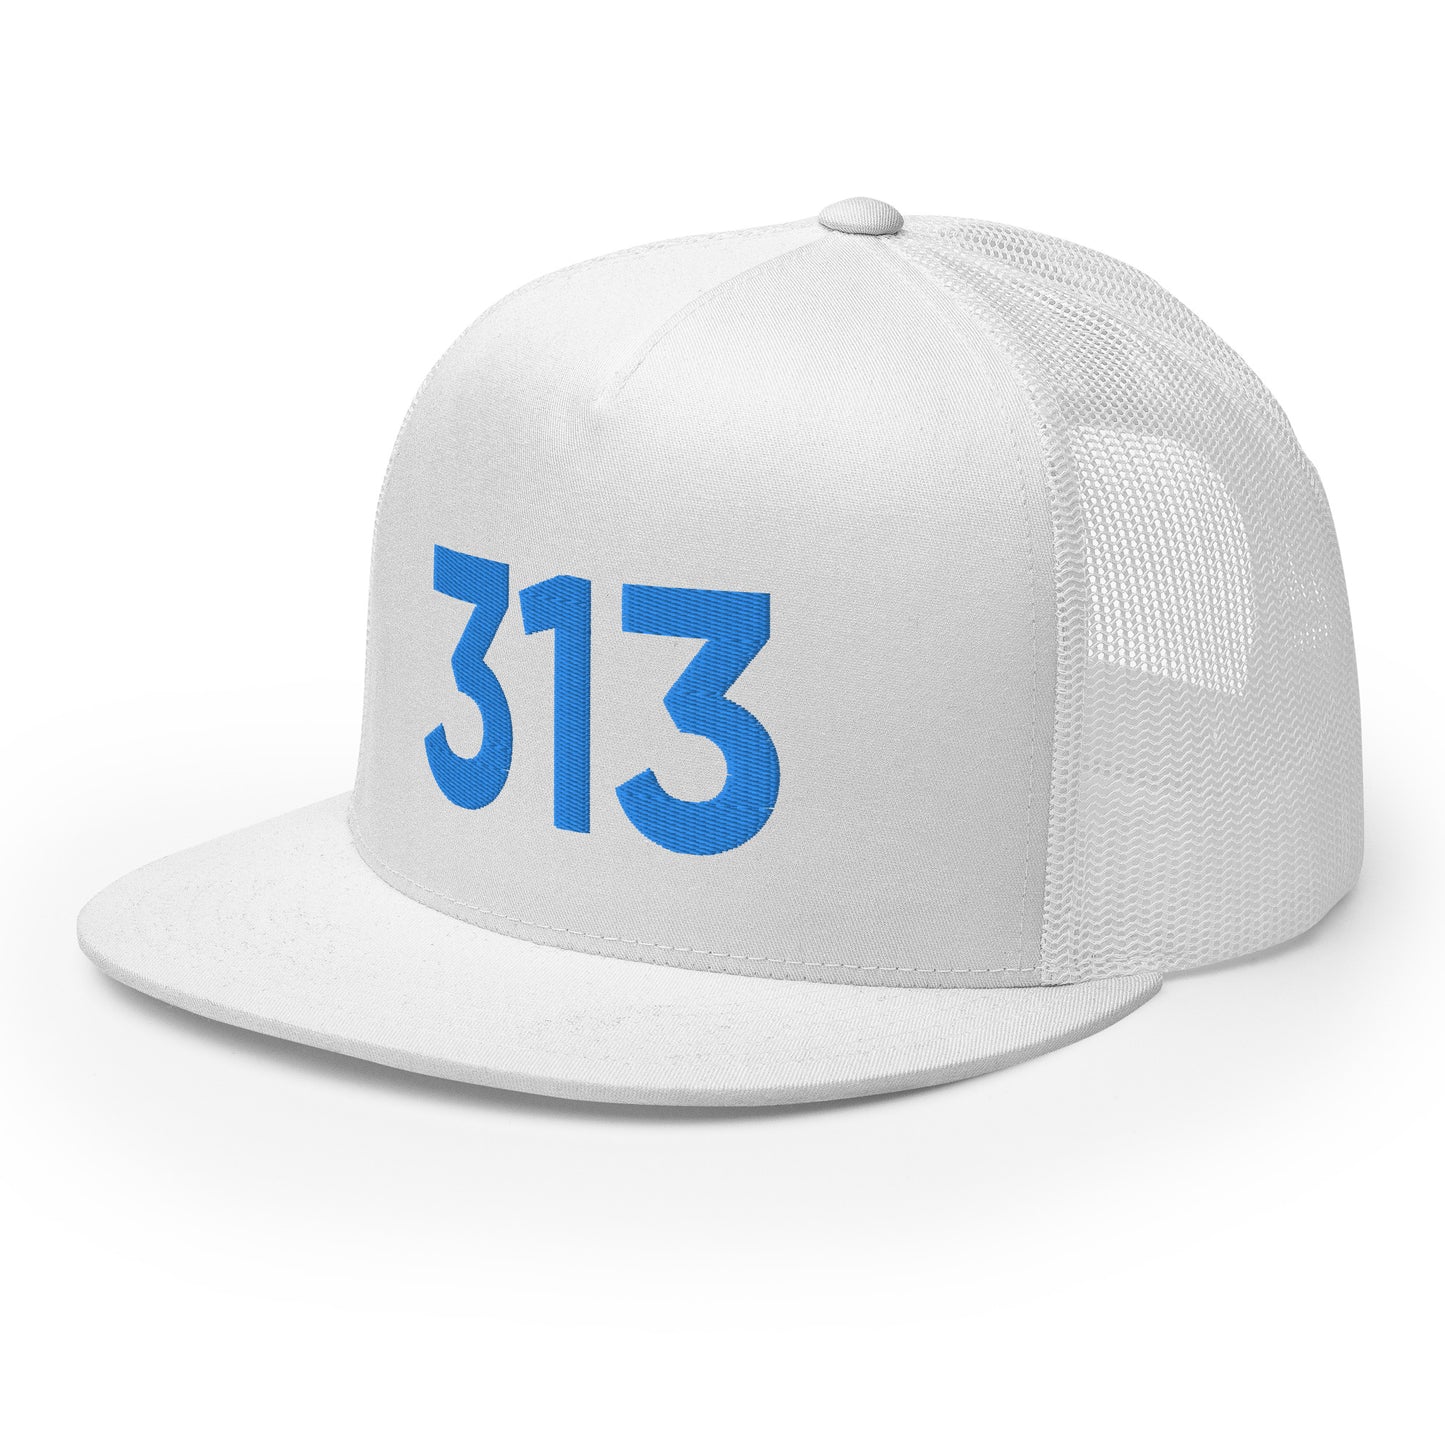 313 Detroit Strong Trucker Hat